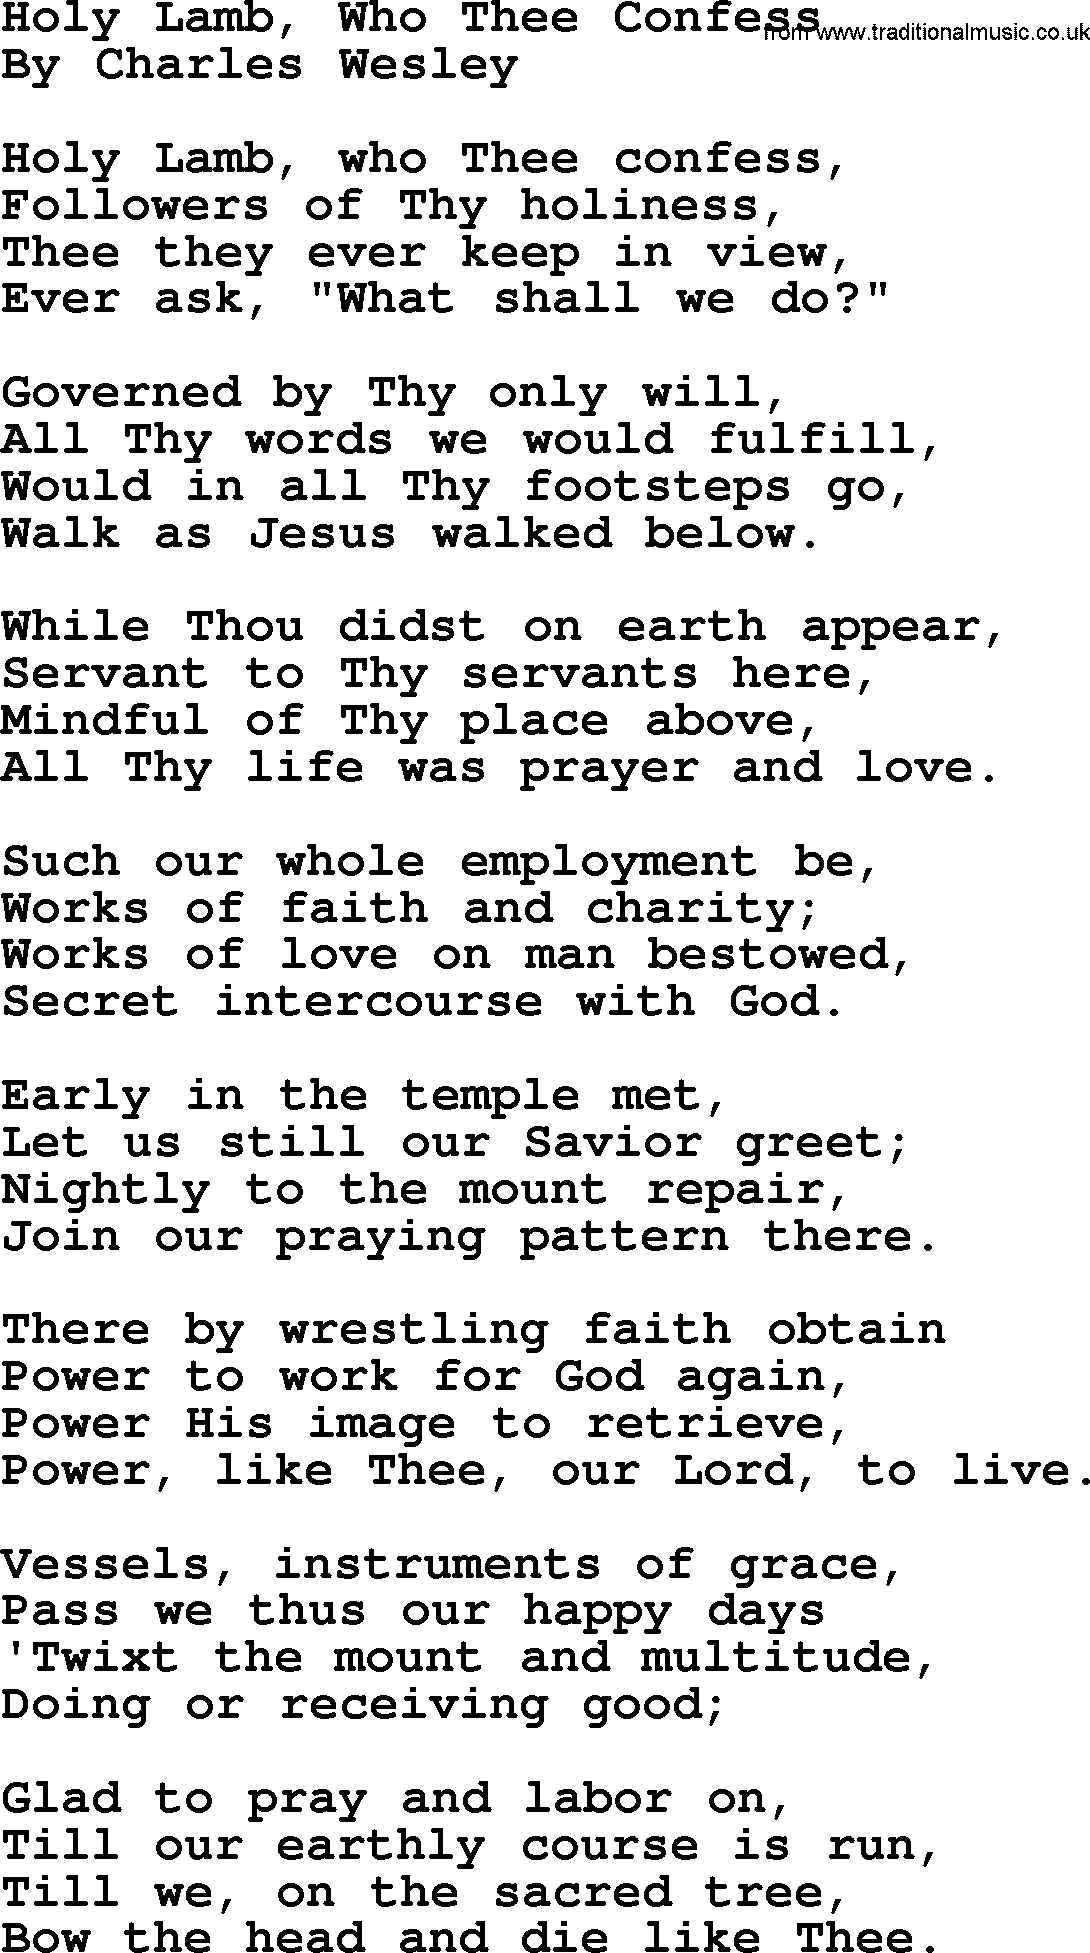 Charles Wesley hymn: Holy Lamb, Who Thee Confess, lyrics